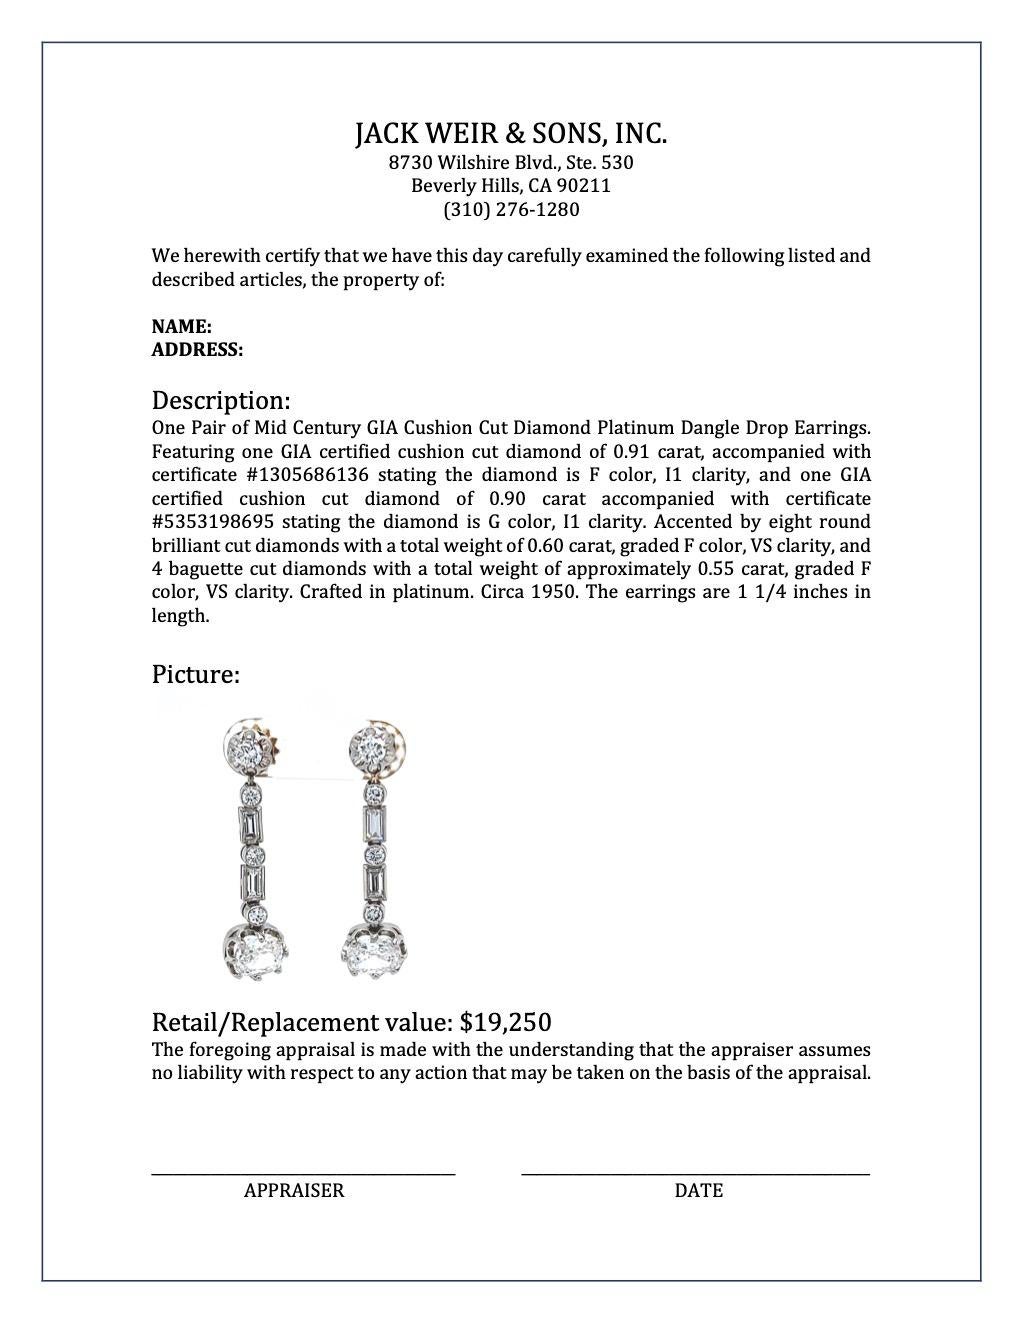 Mid-Century GIA 0.91ct/0.90ct Cushion Cut Diamond Platinum Dangle Drop Earrings 4